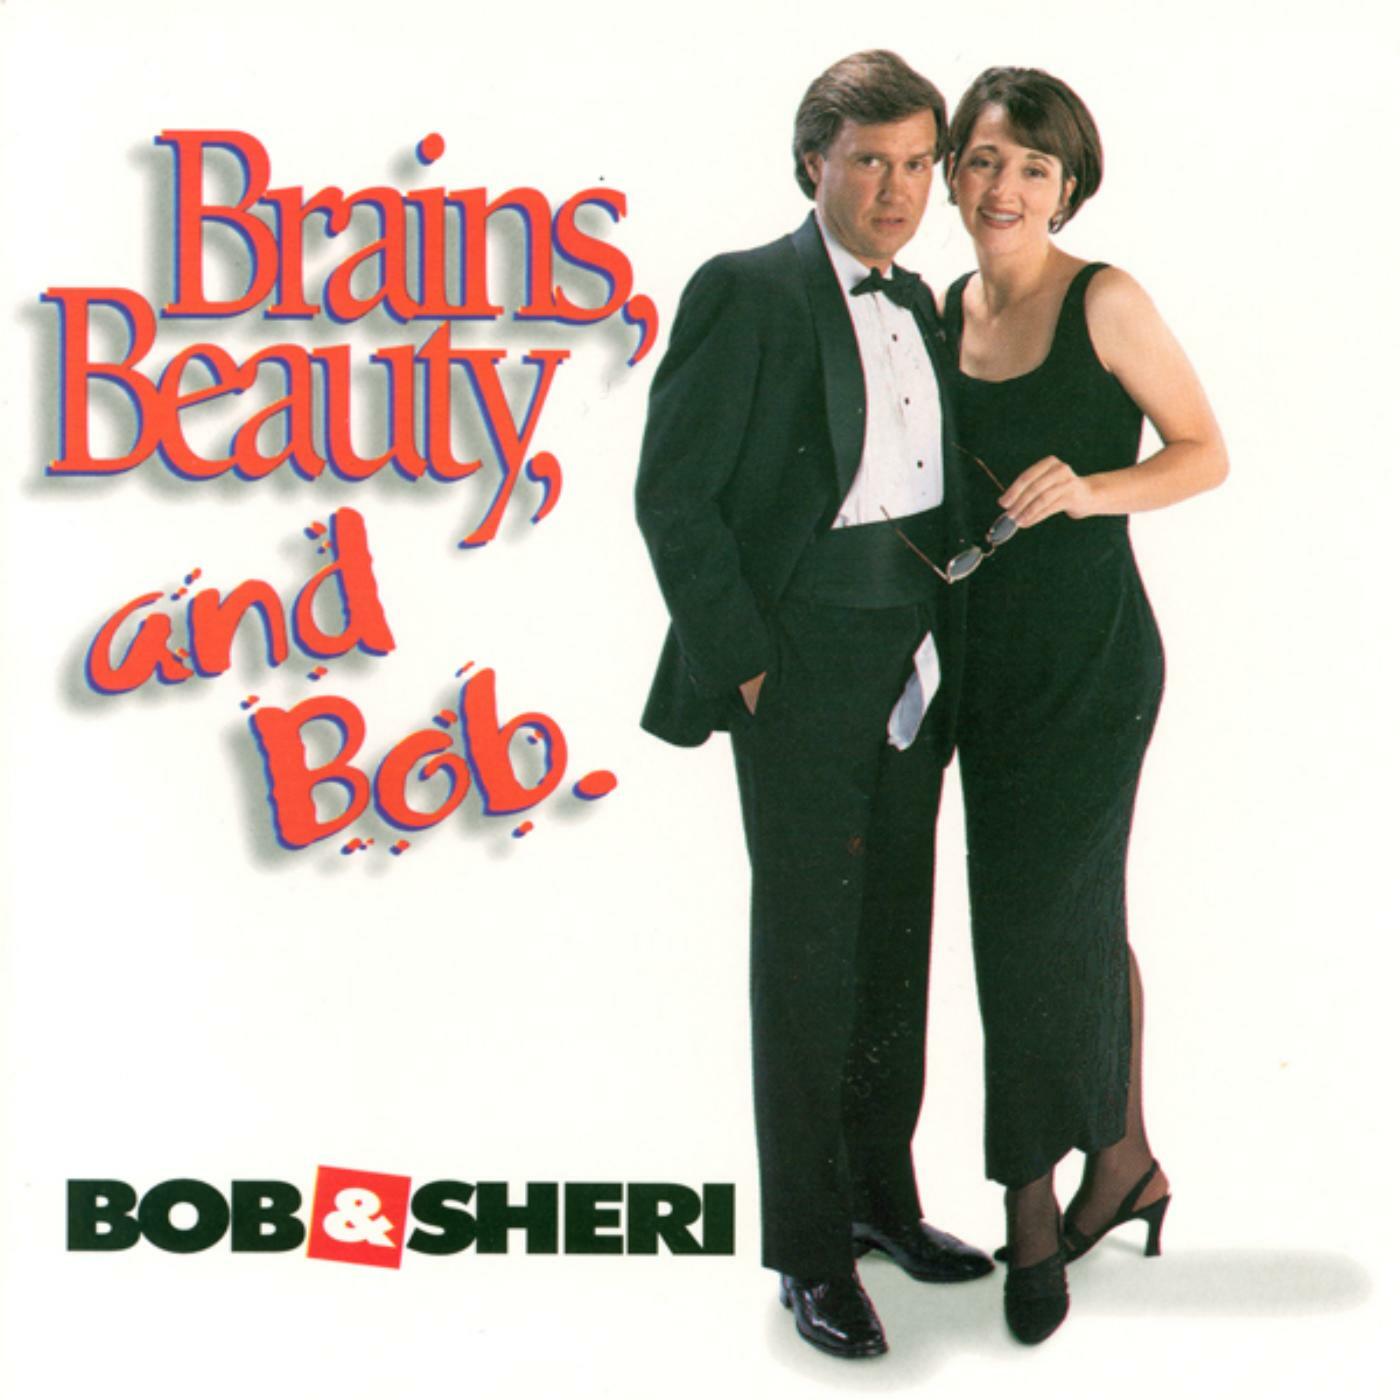 Bob And Sheri Brains Beauty And Bob Iheart